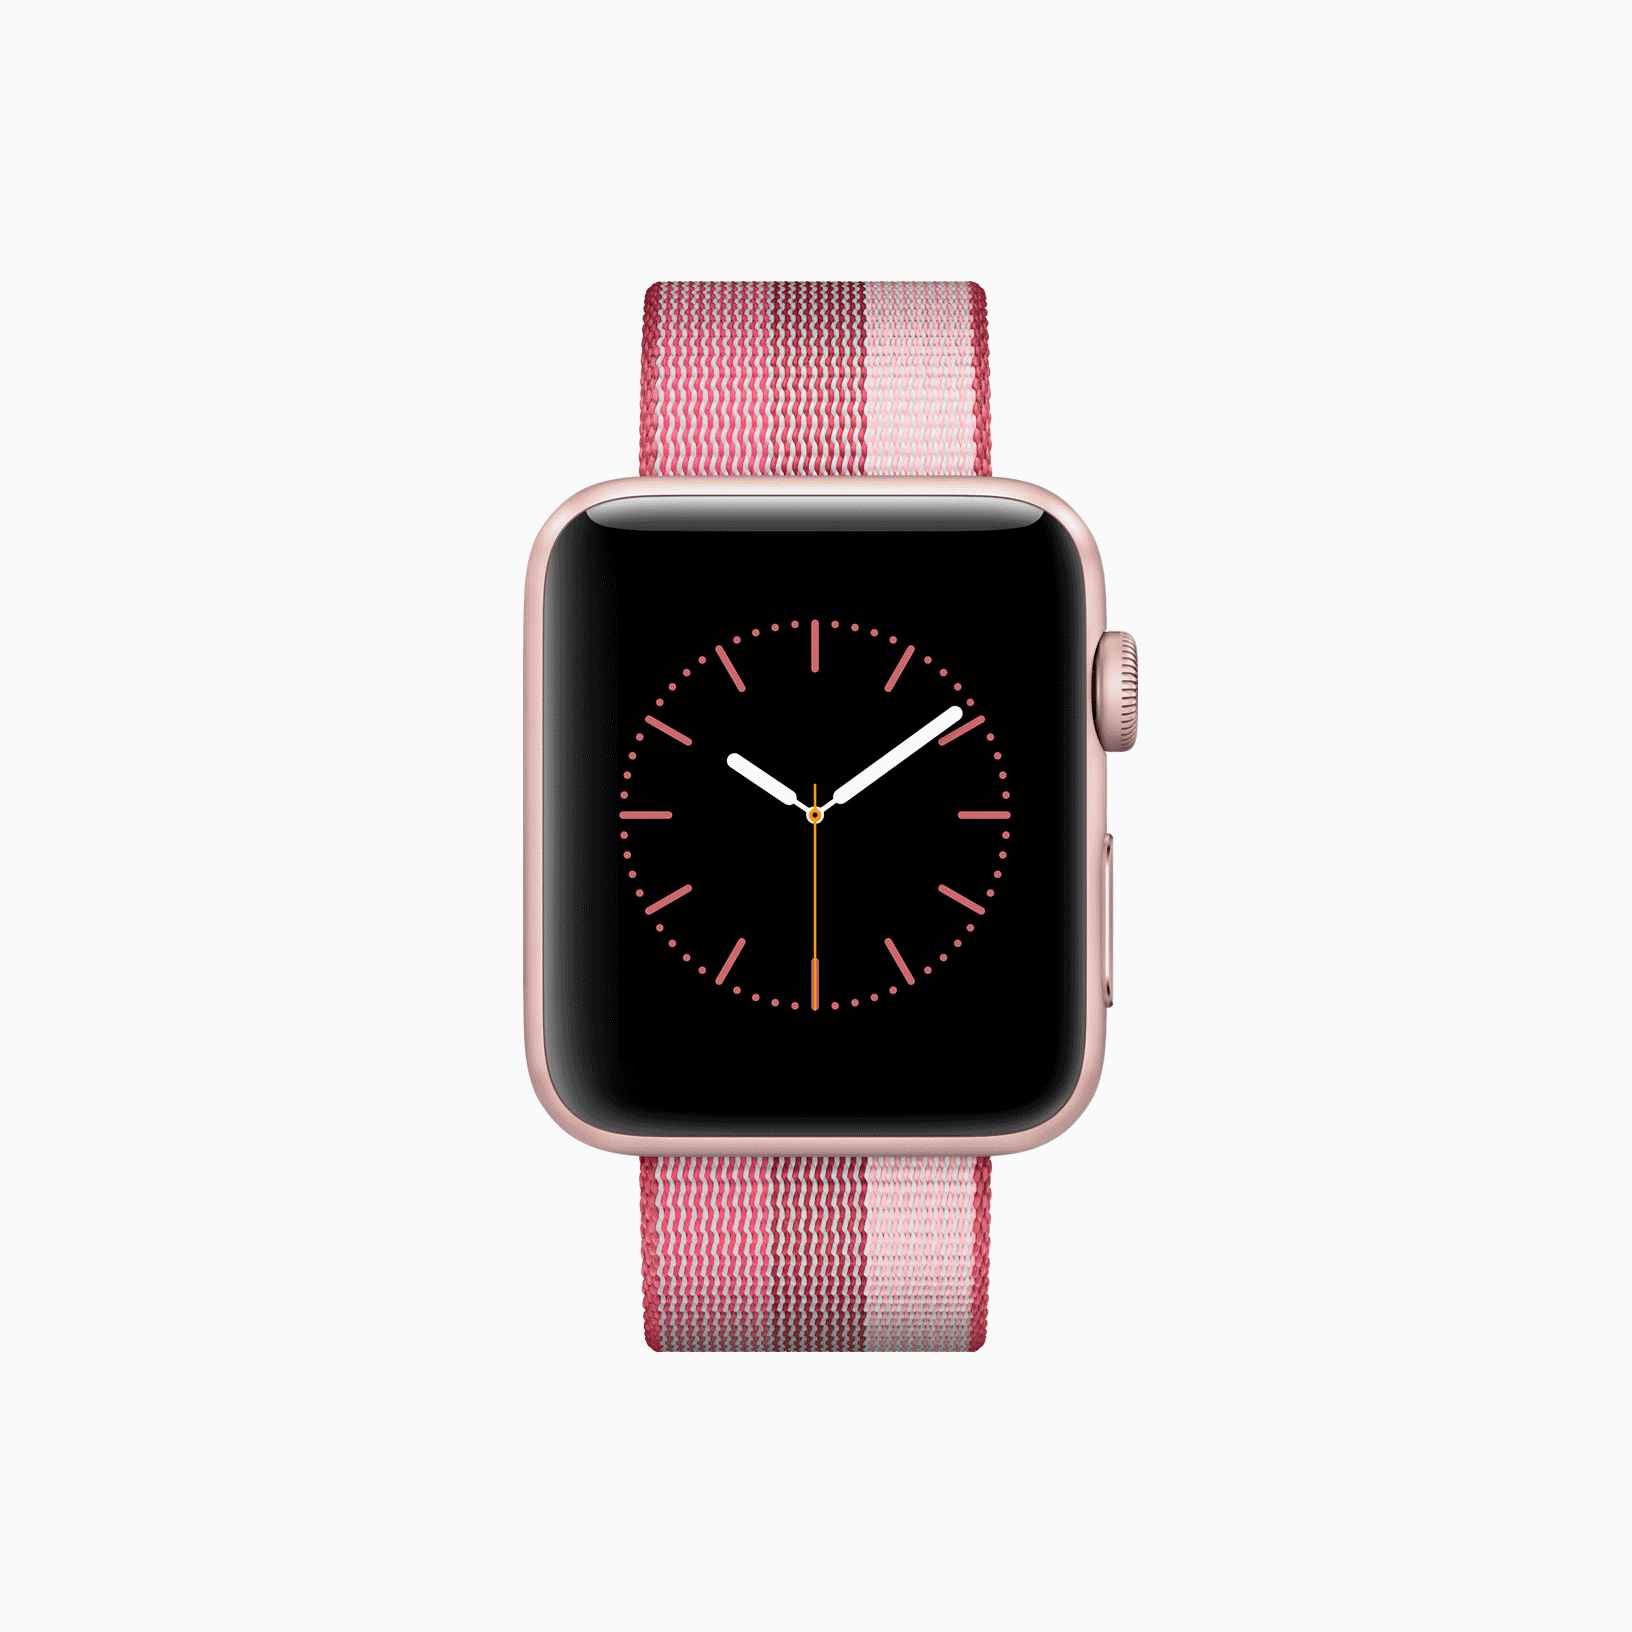 Pilihan warna baru tali Apple Watch koleksi Spring 2017